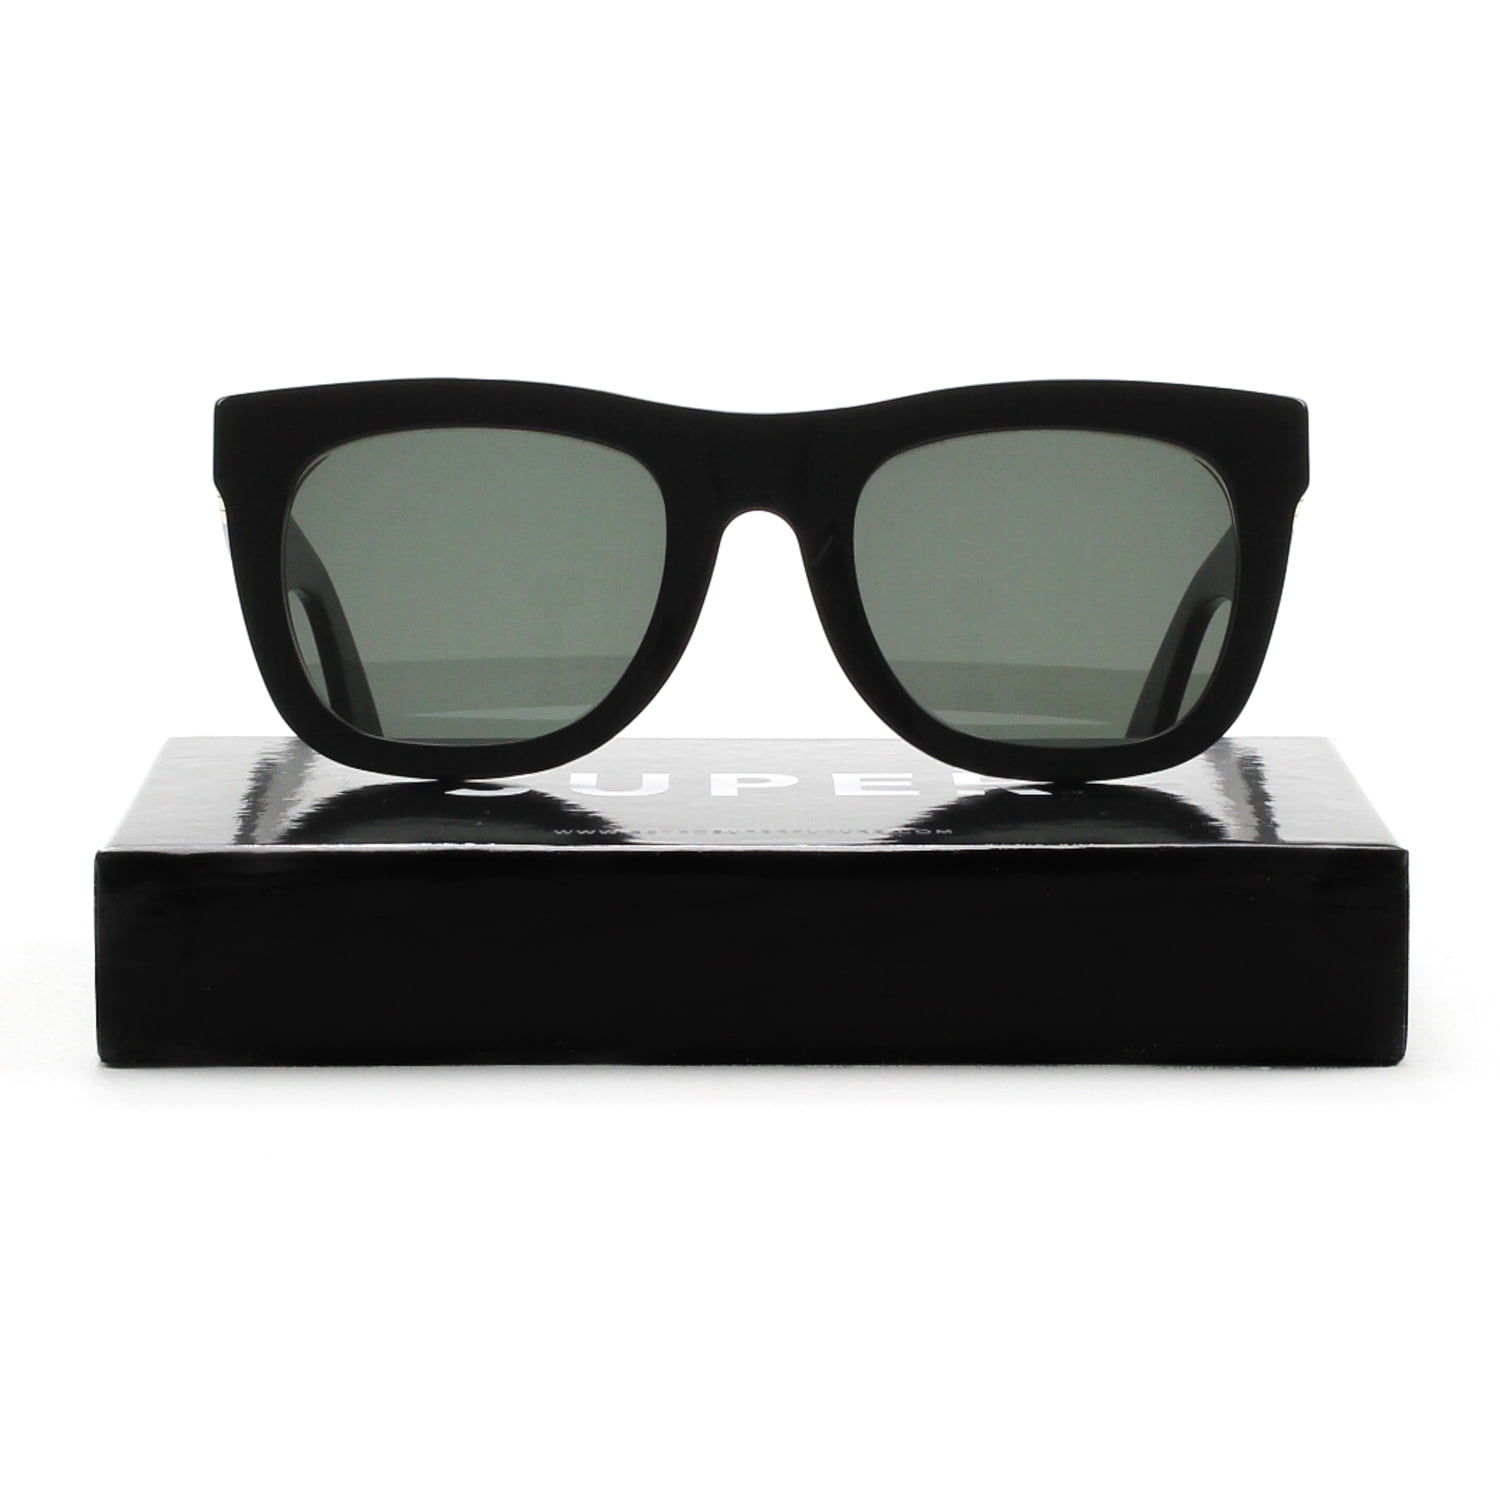 New SUPER by RETROSUPERFUTURE sunglasses Ciccio Glanni 87A/R Black Lens by Zeiss 